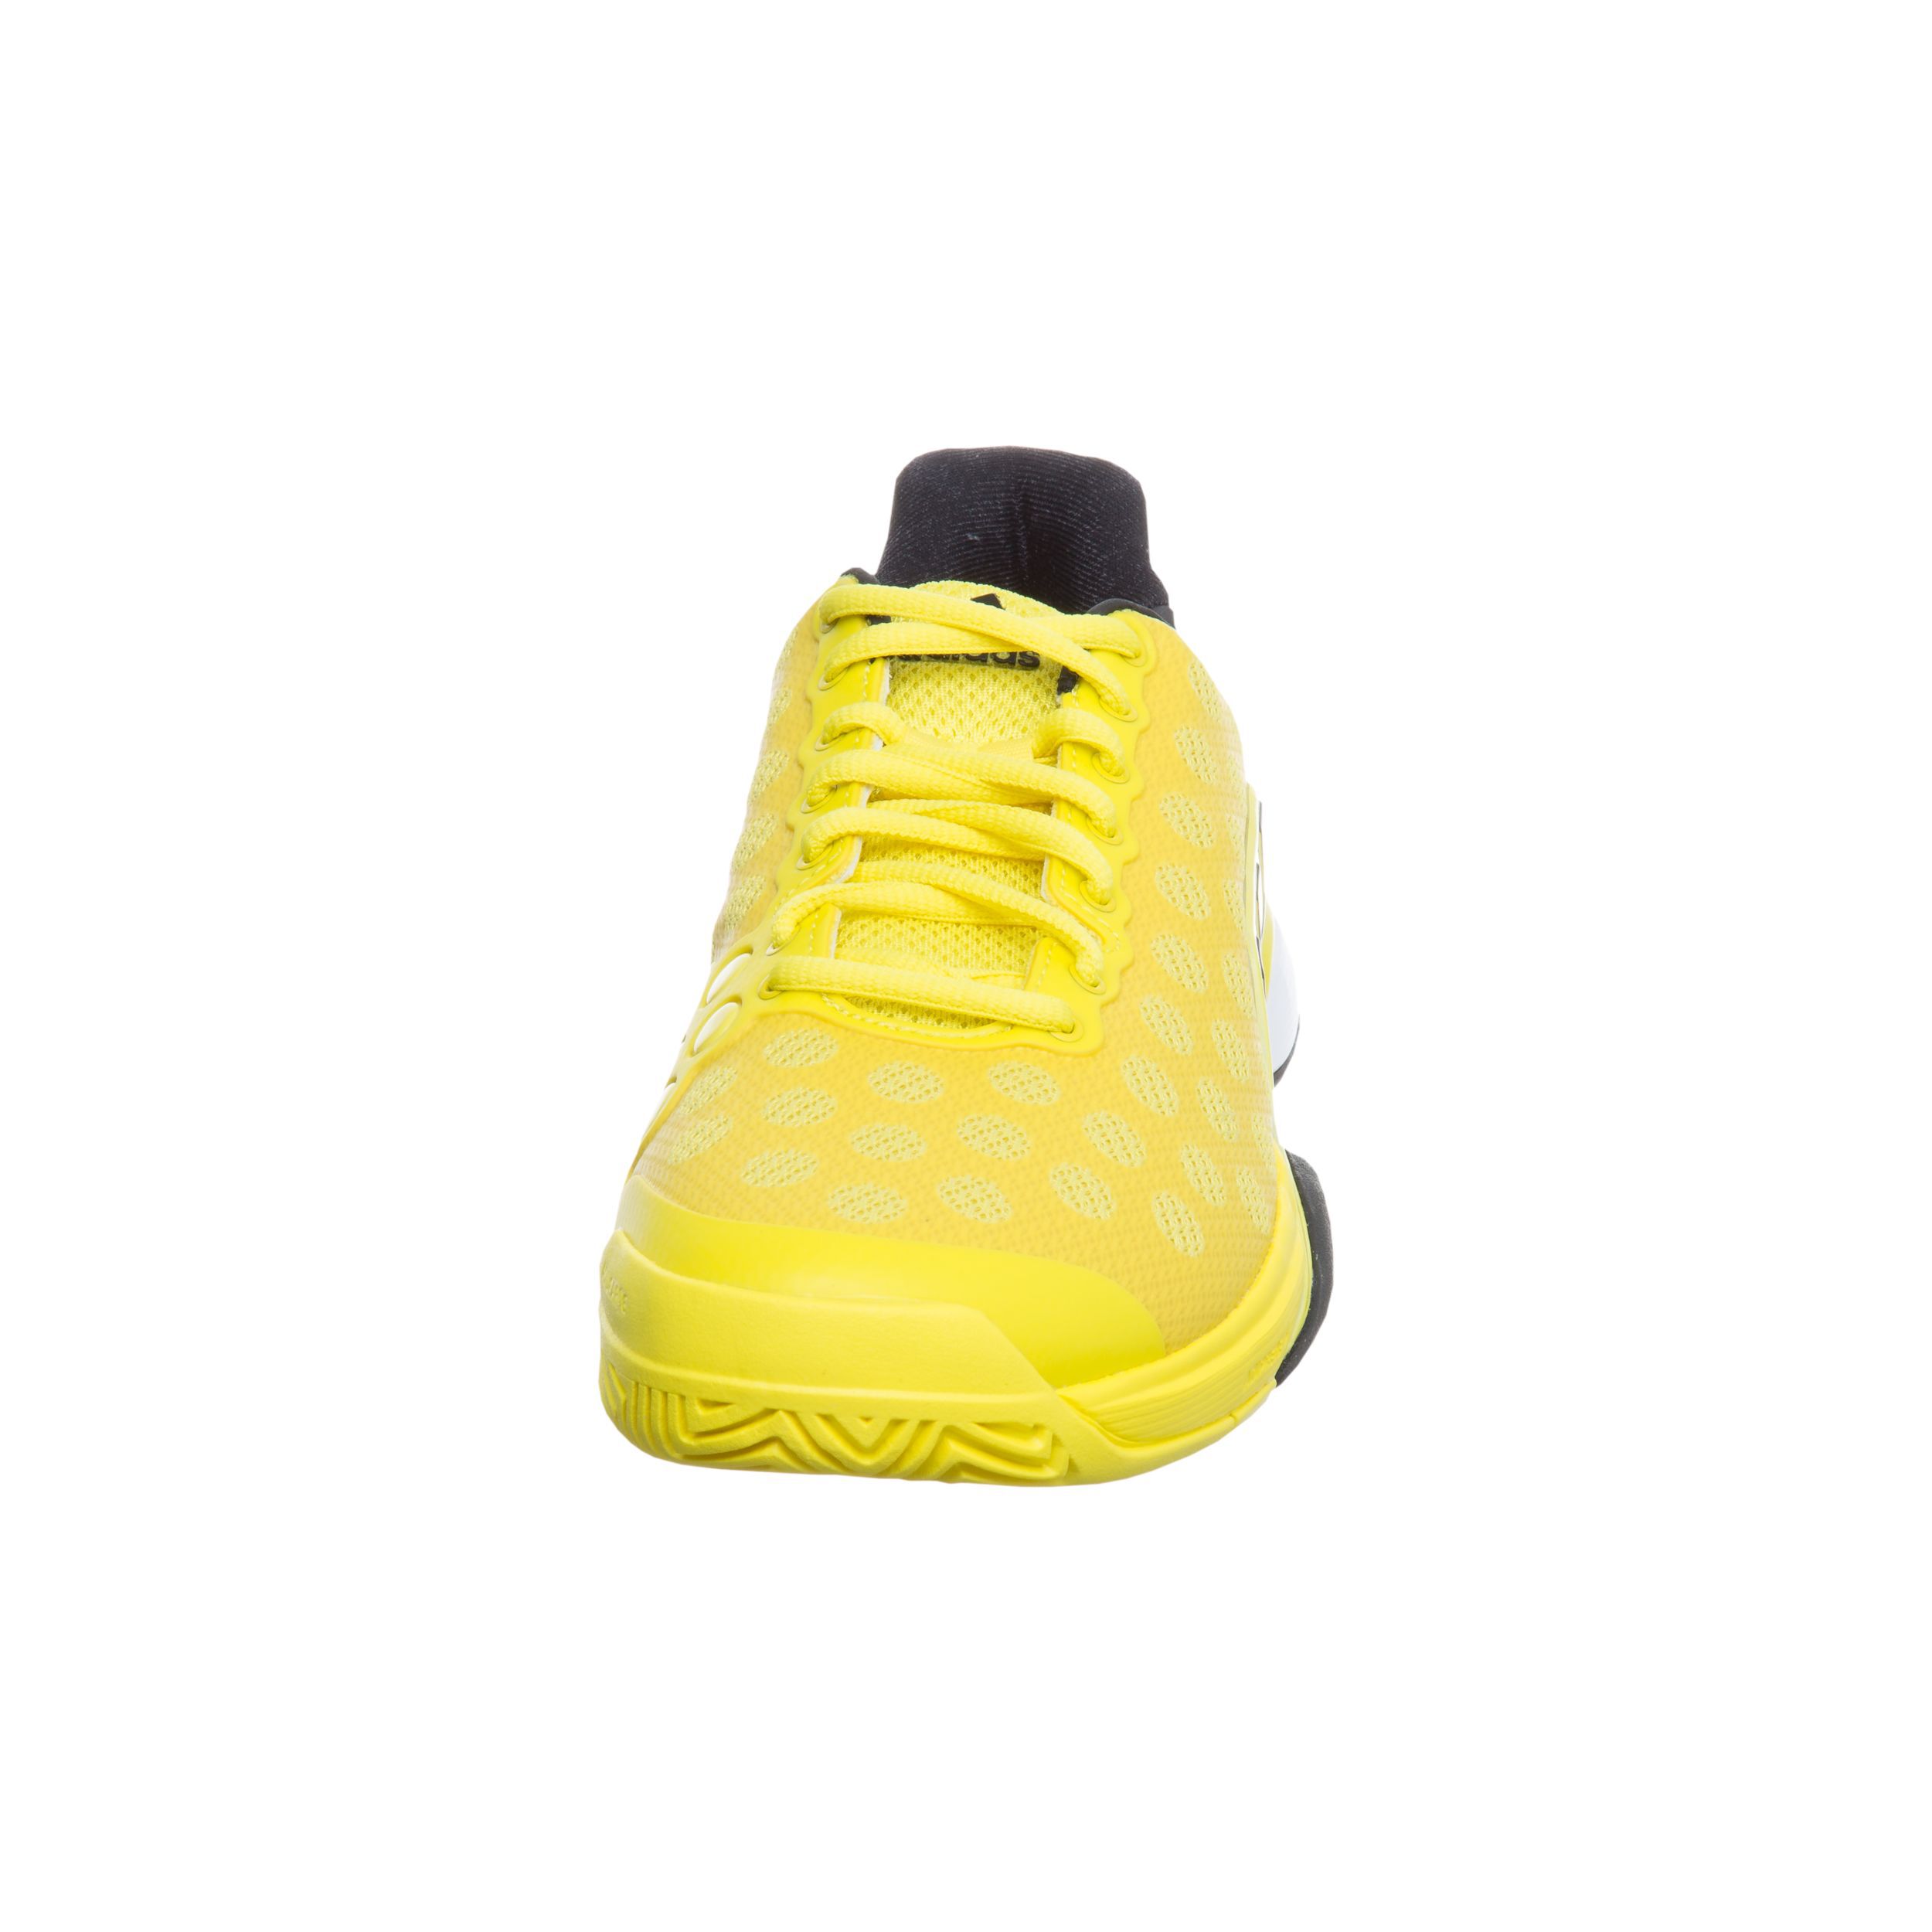 Barricade 2015 All Court Shoe Men - Yellow, Black